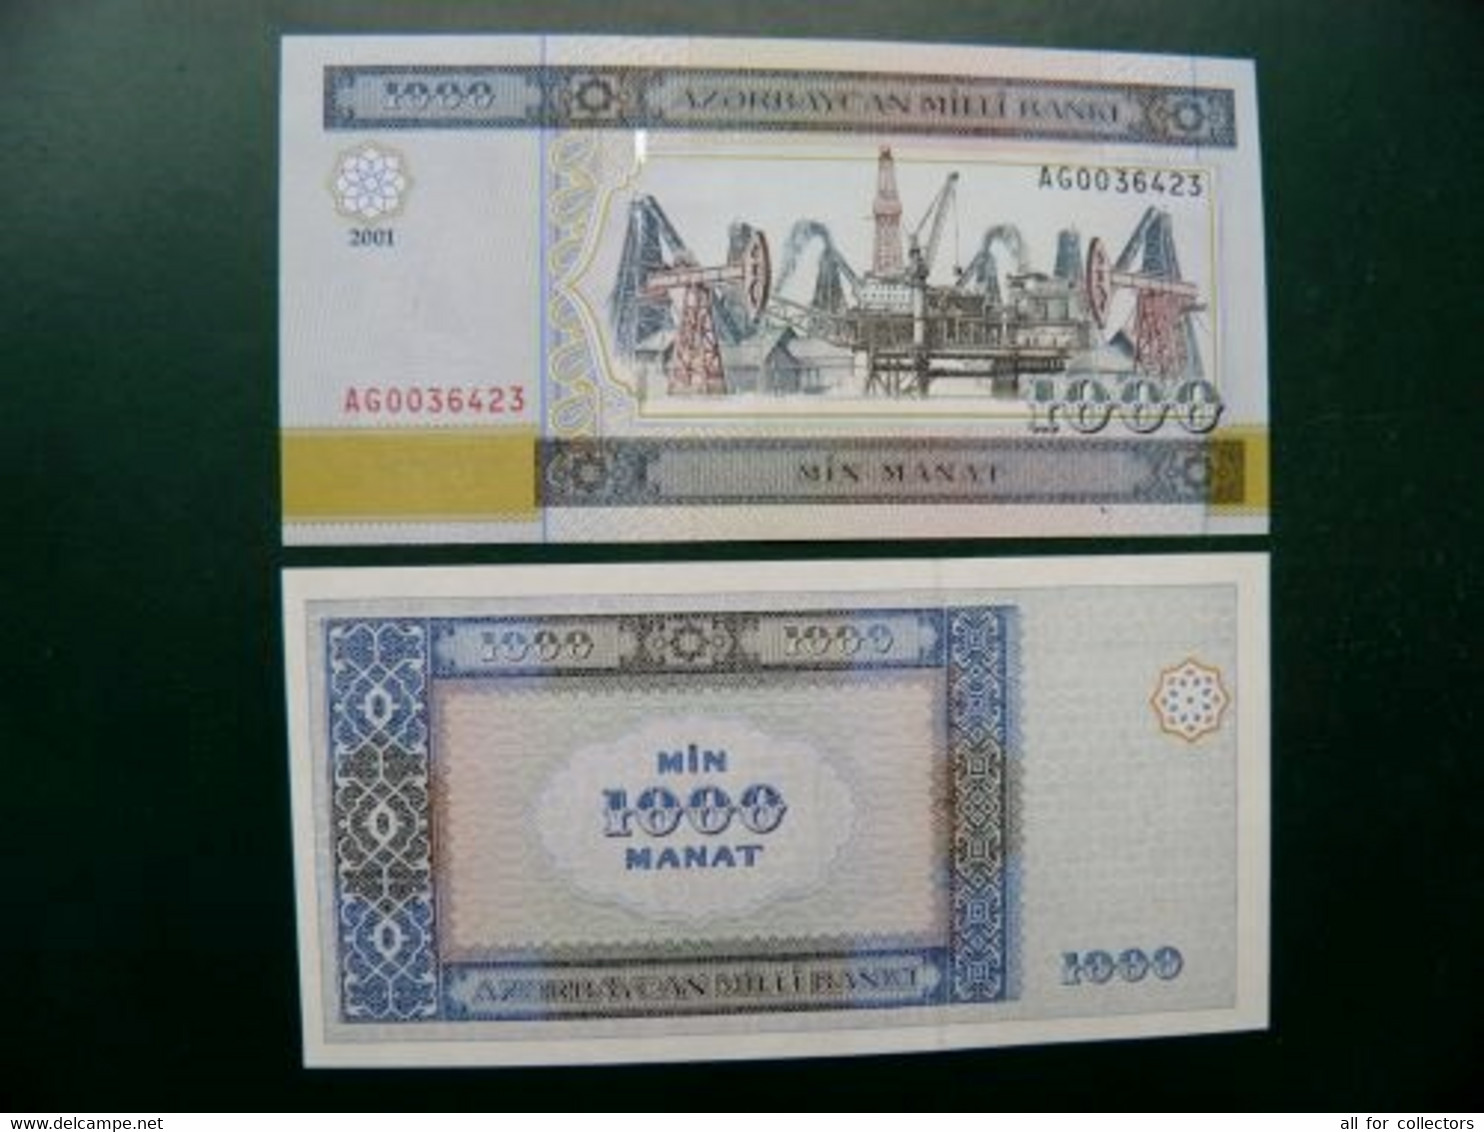 Unc Banknote Azerbaijan 1000 Manat 2001 P-23 Oil Rigs And Pumps Prefix AG - Azerbaïjan